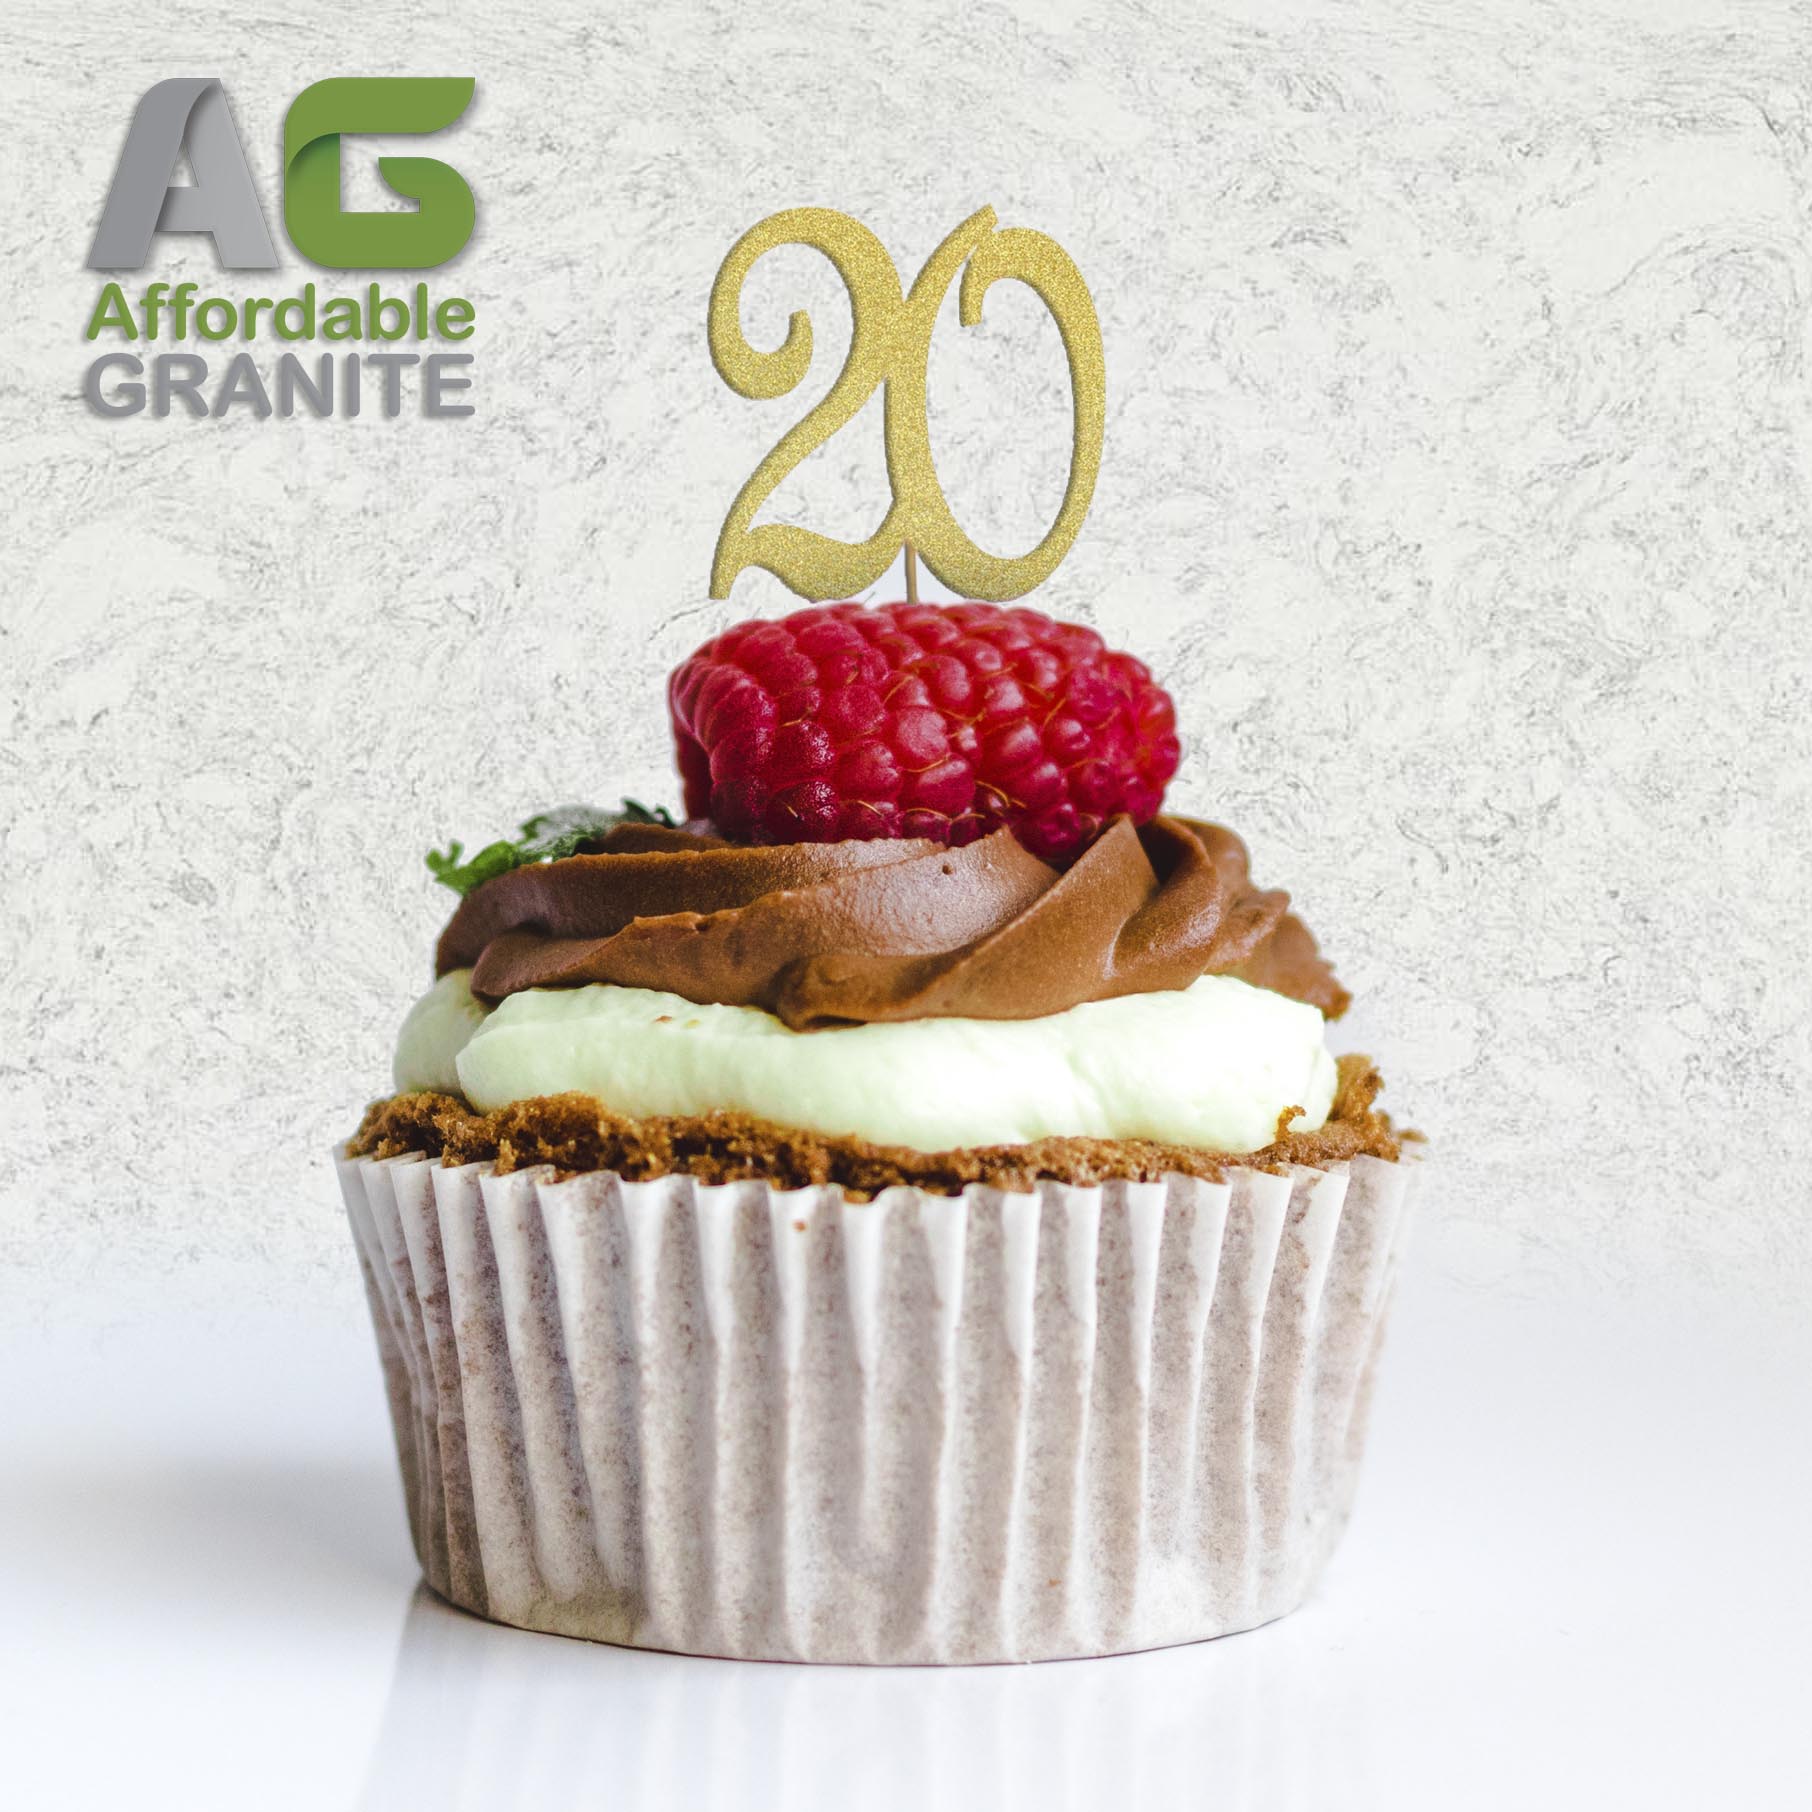 20th birthday affordable granite kitchen worktops AG logo 20 years